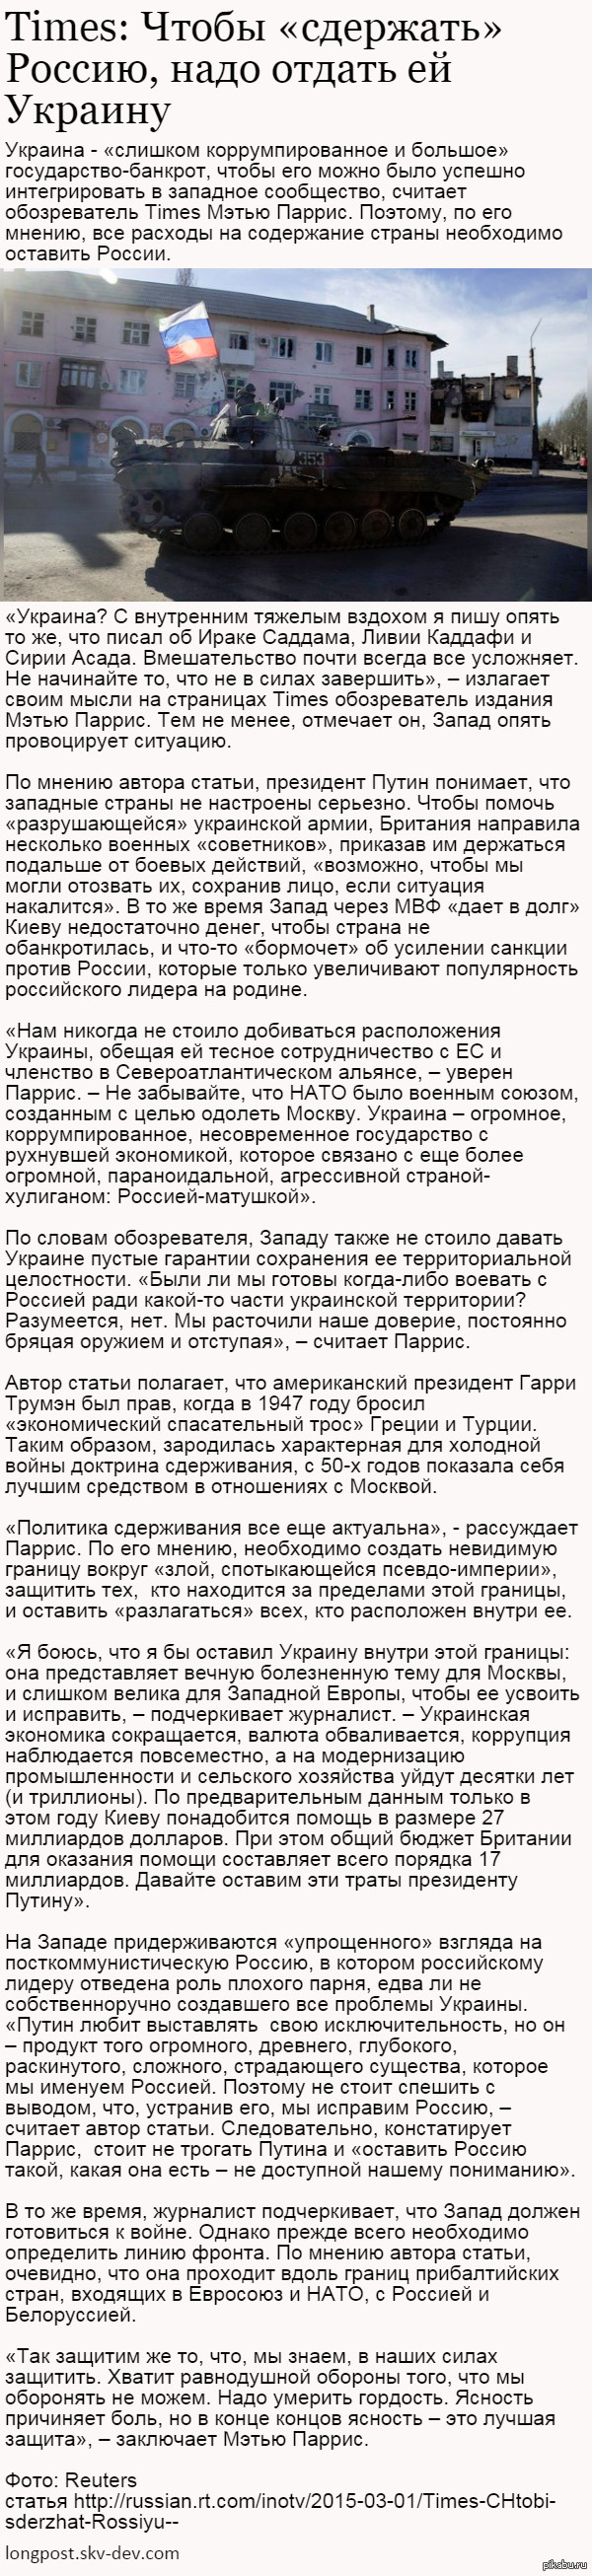 Times:   ,     http://russian.rt.com/inotv/2015-03-01/Times-CHtobi-sderzhat-Rossiyu--